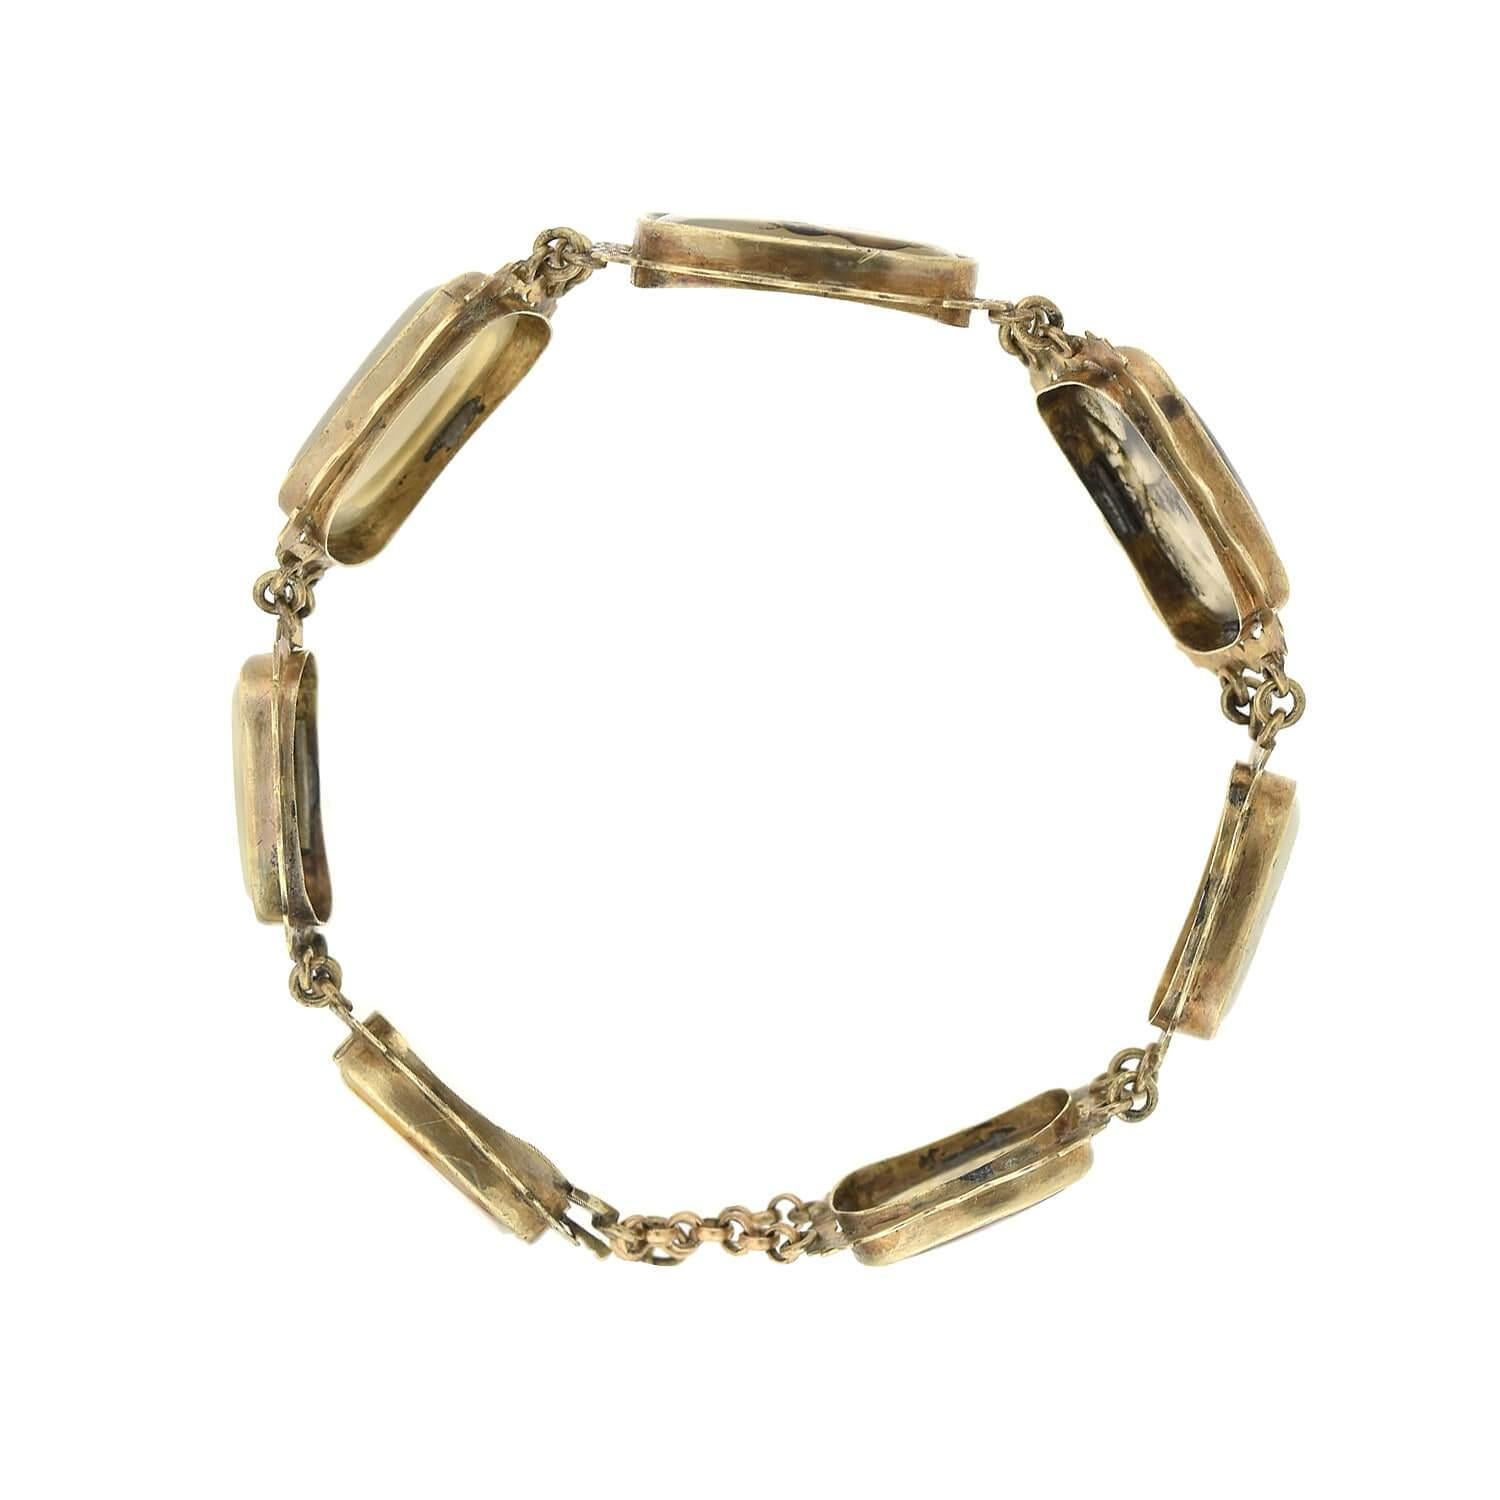 dendritic agate bracelet